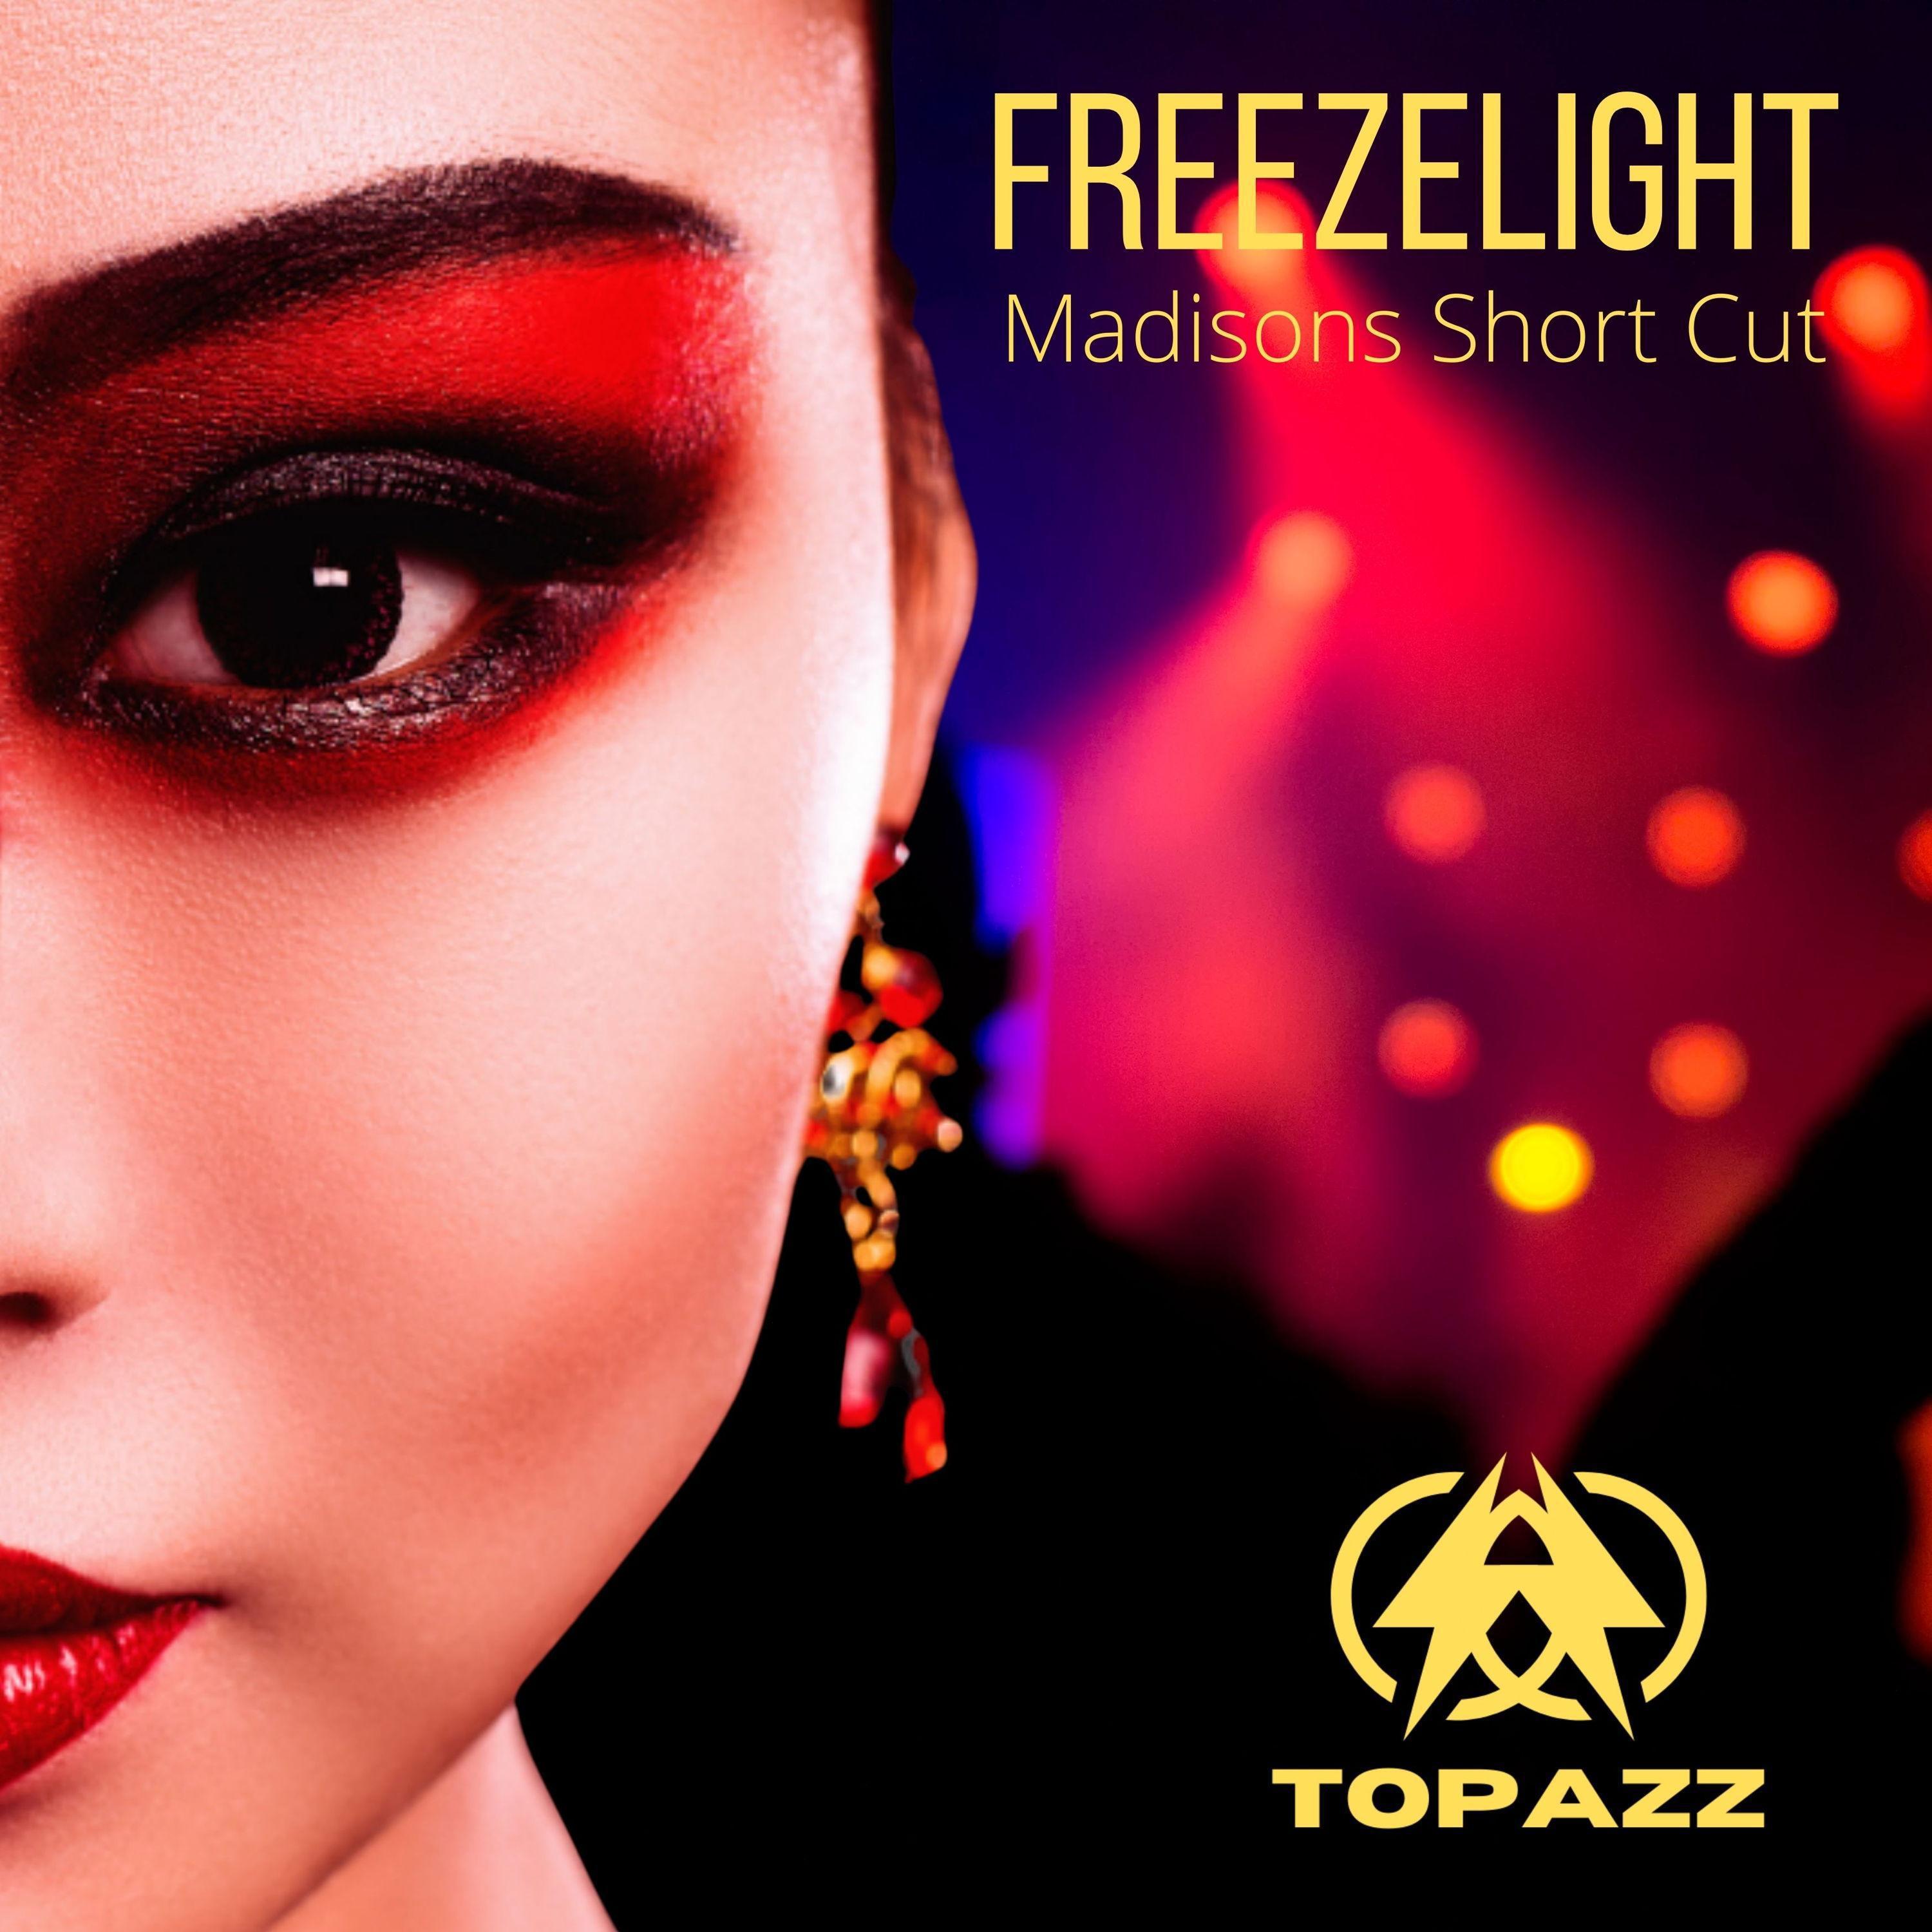 Topazz - Freezelight Madisons Short Cut X